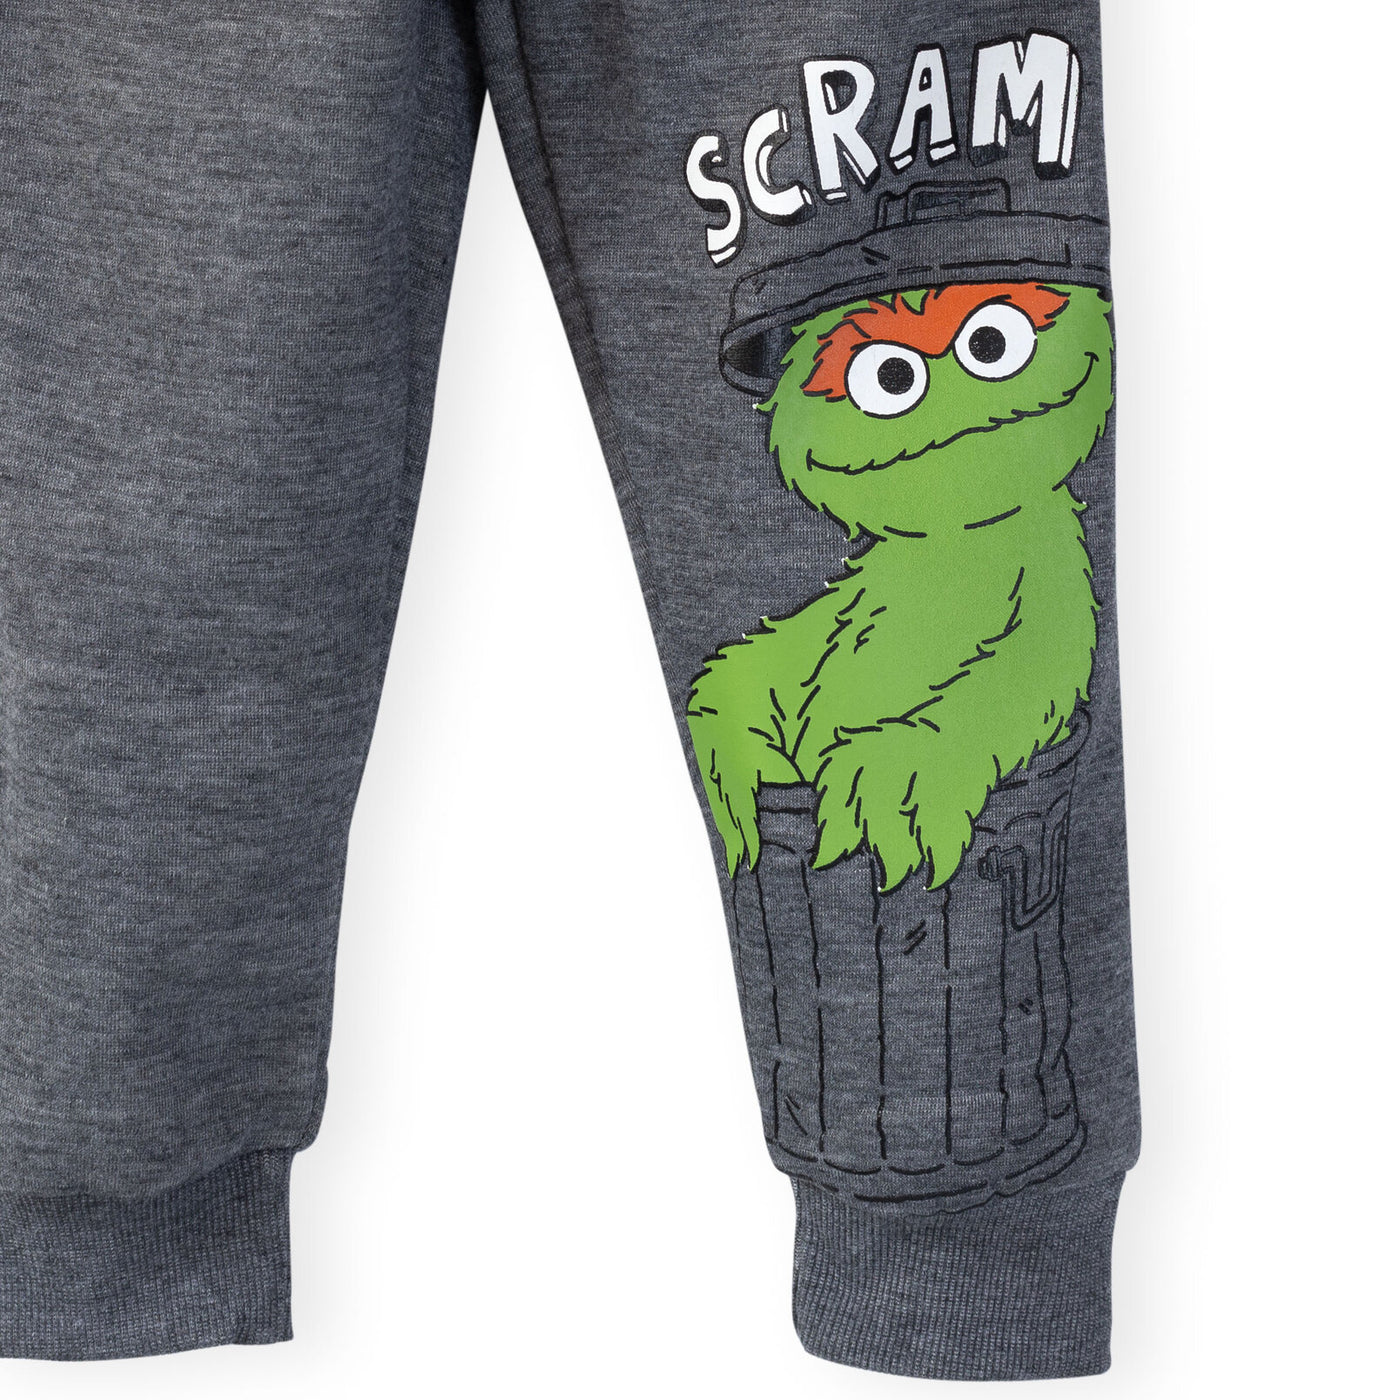 Sesame Street Fleece 3 Pack Pants